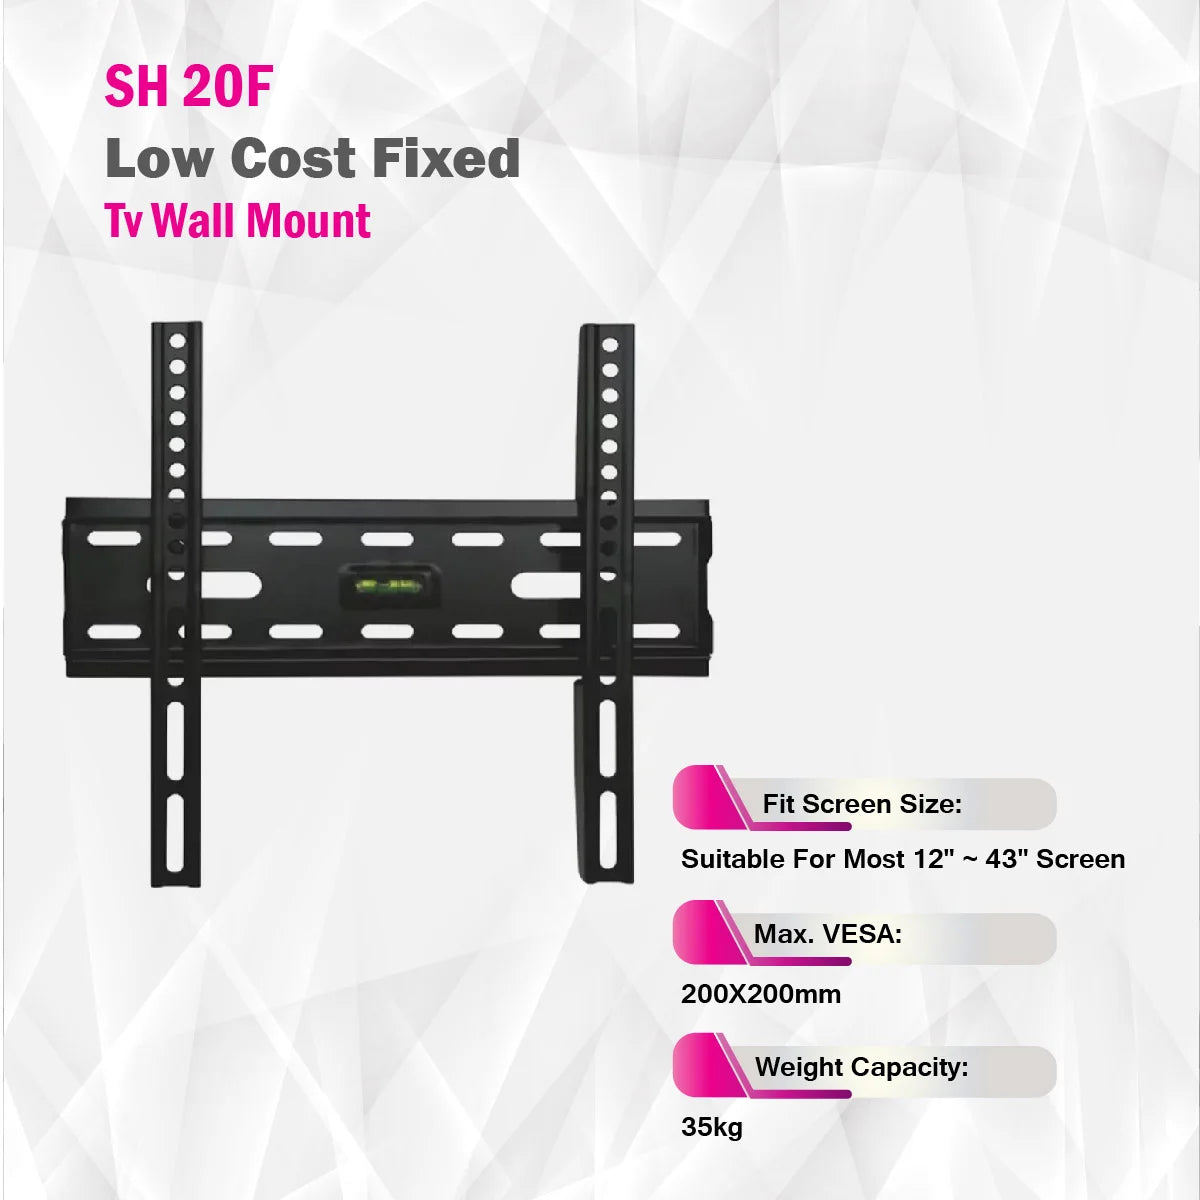 Skill Tech SH 20F - Low Cost Fixed TV Wall Mount